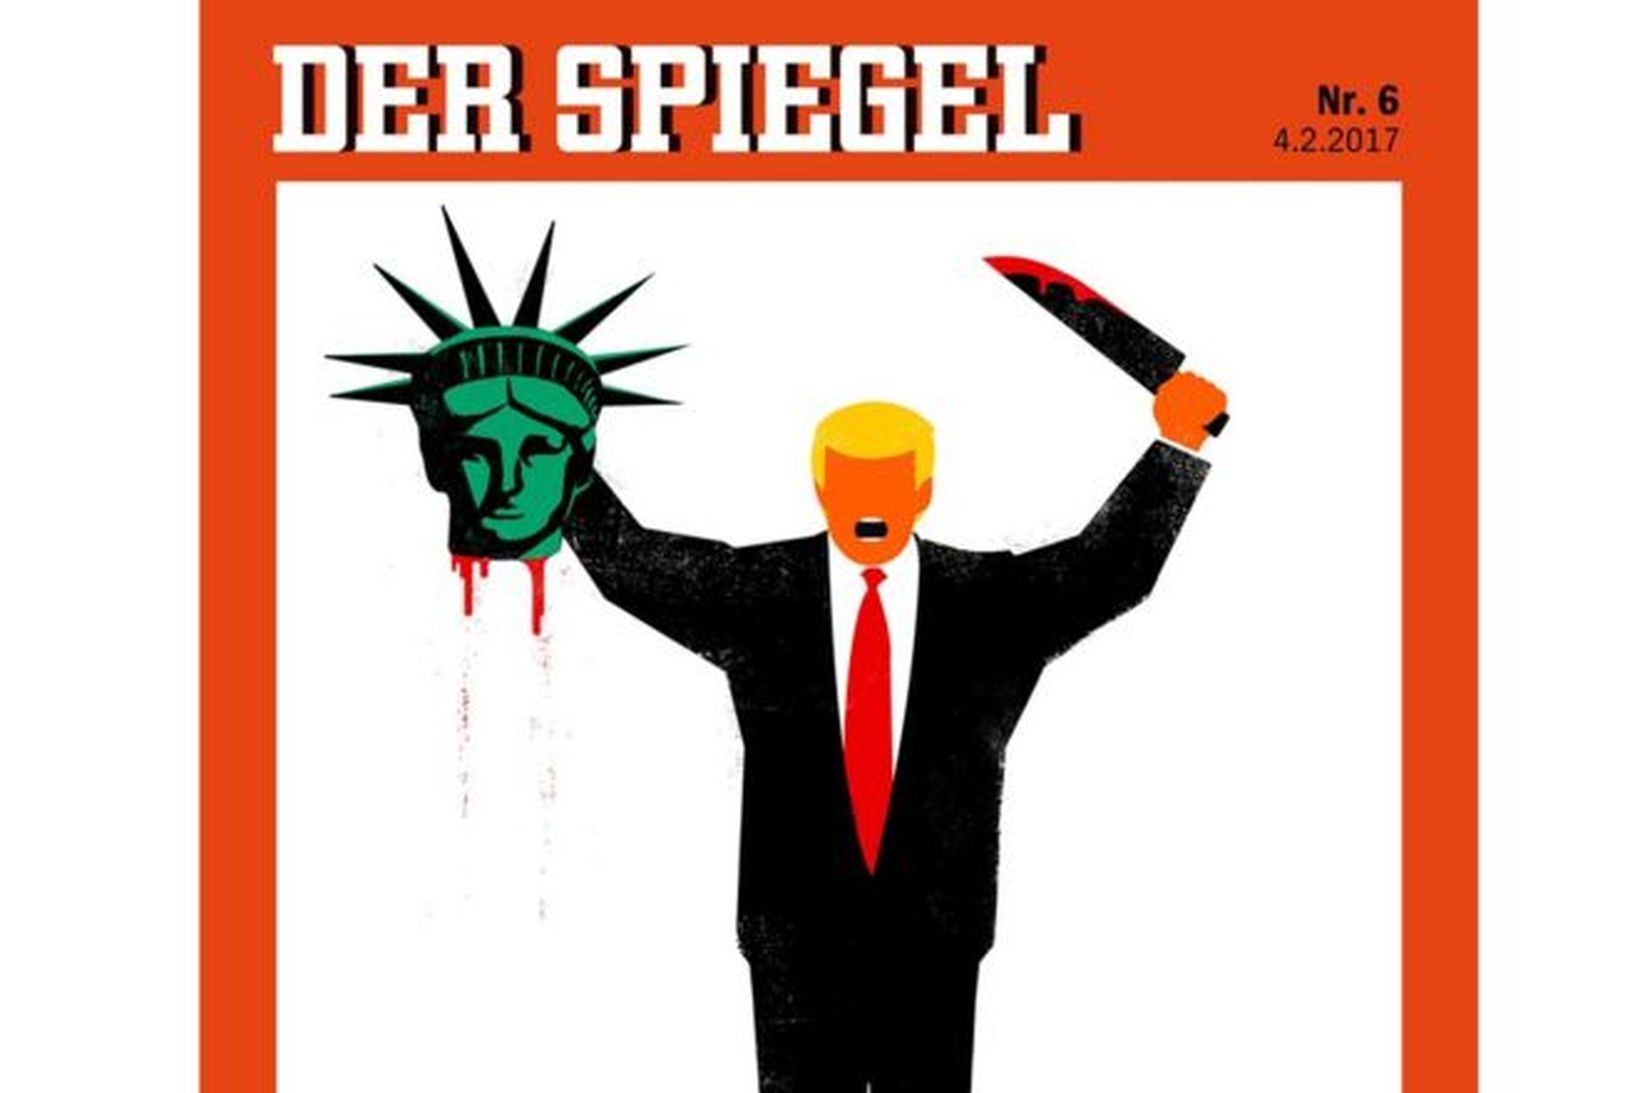 Forsíða Der Spiegel.